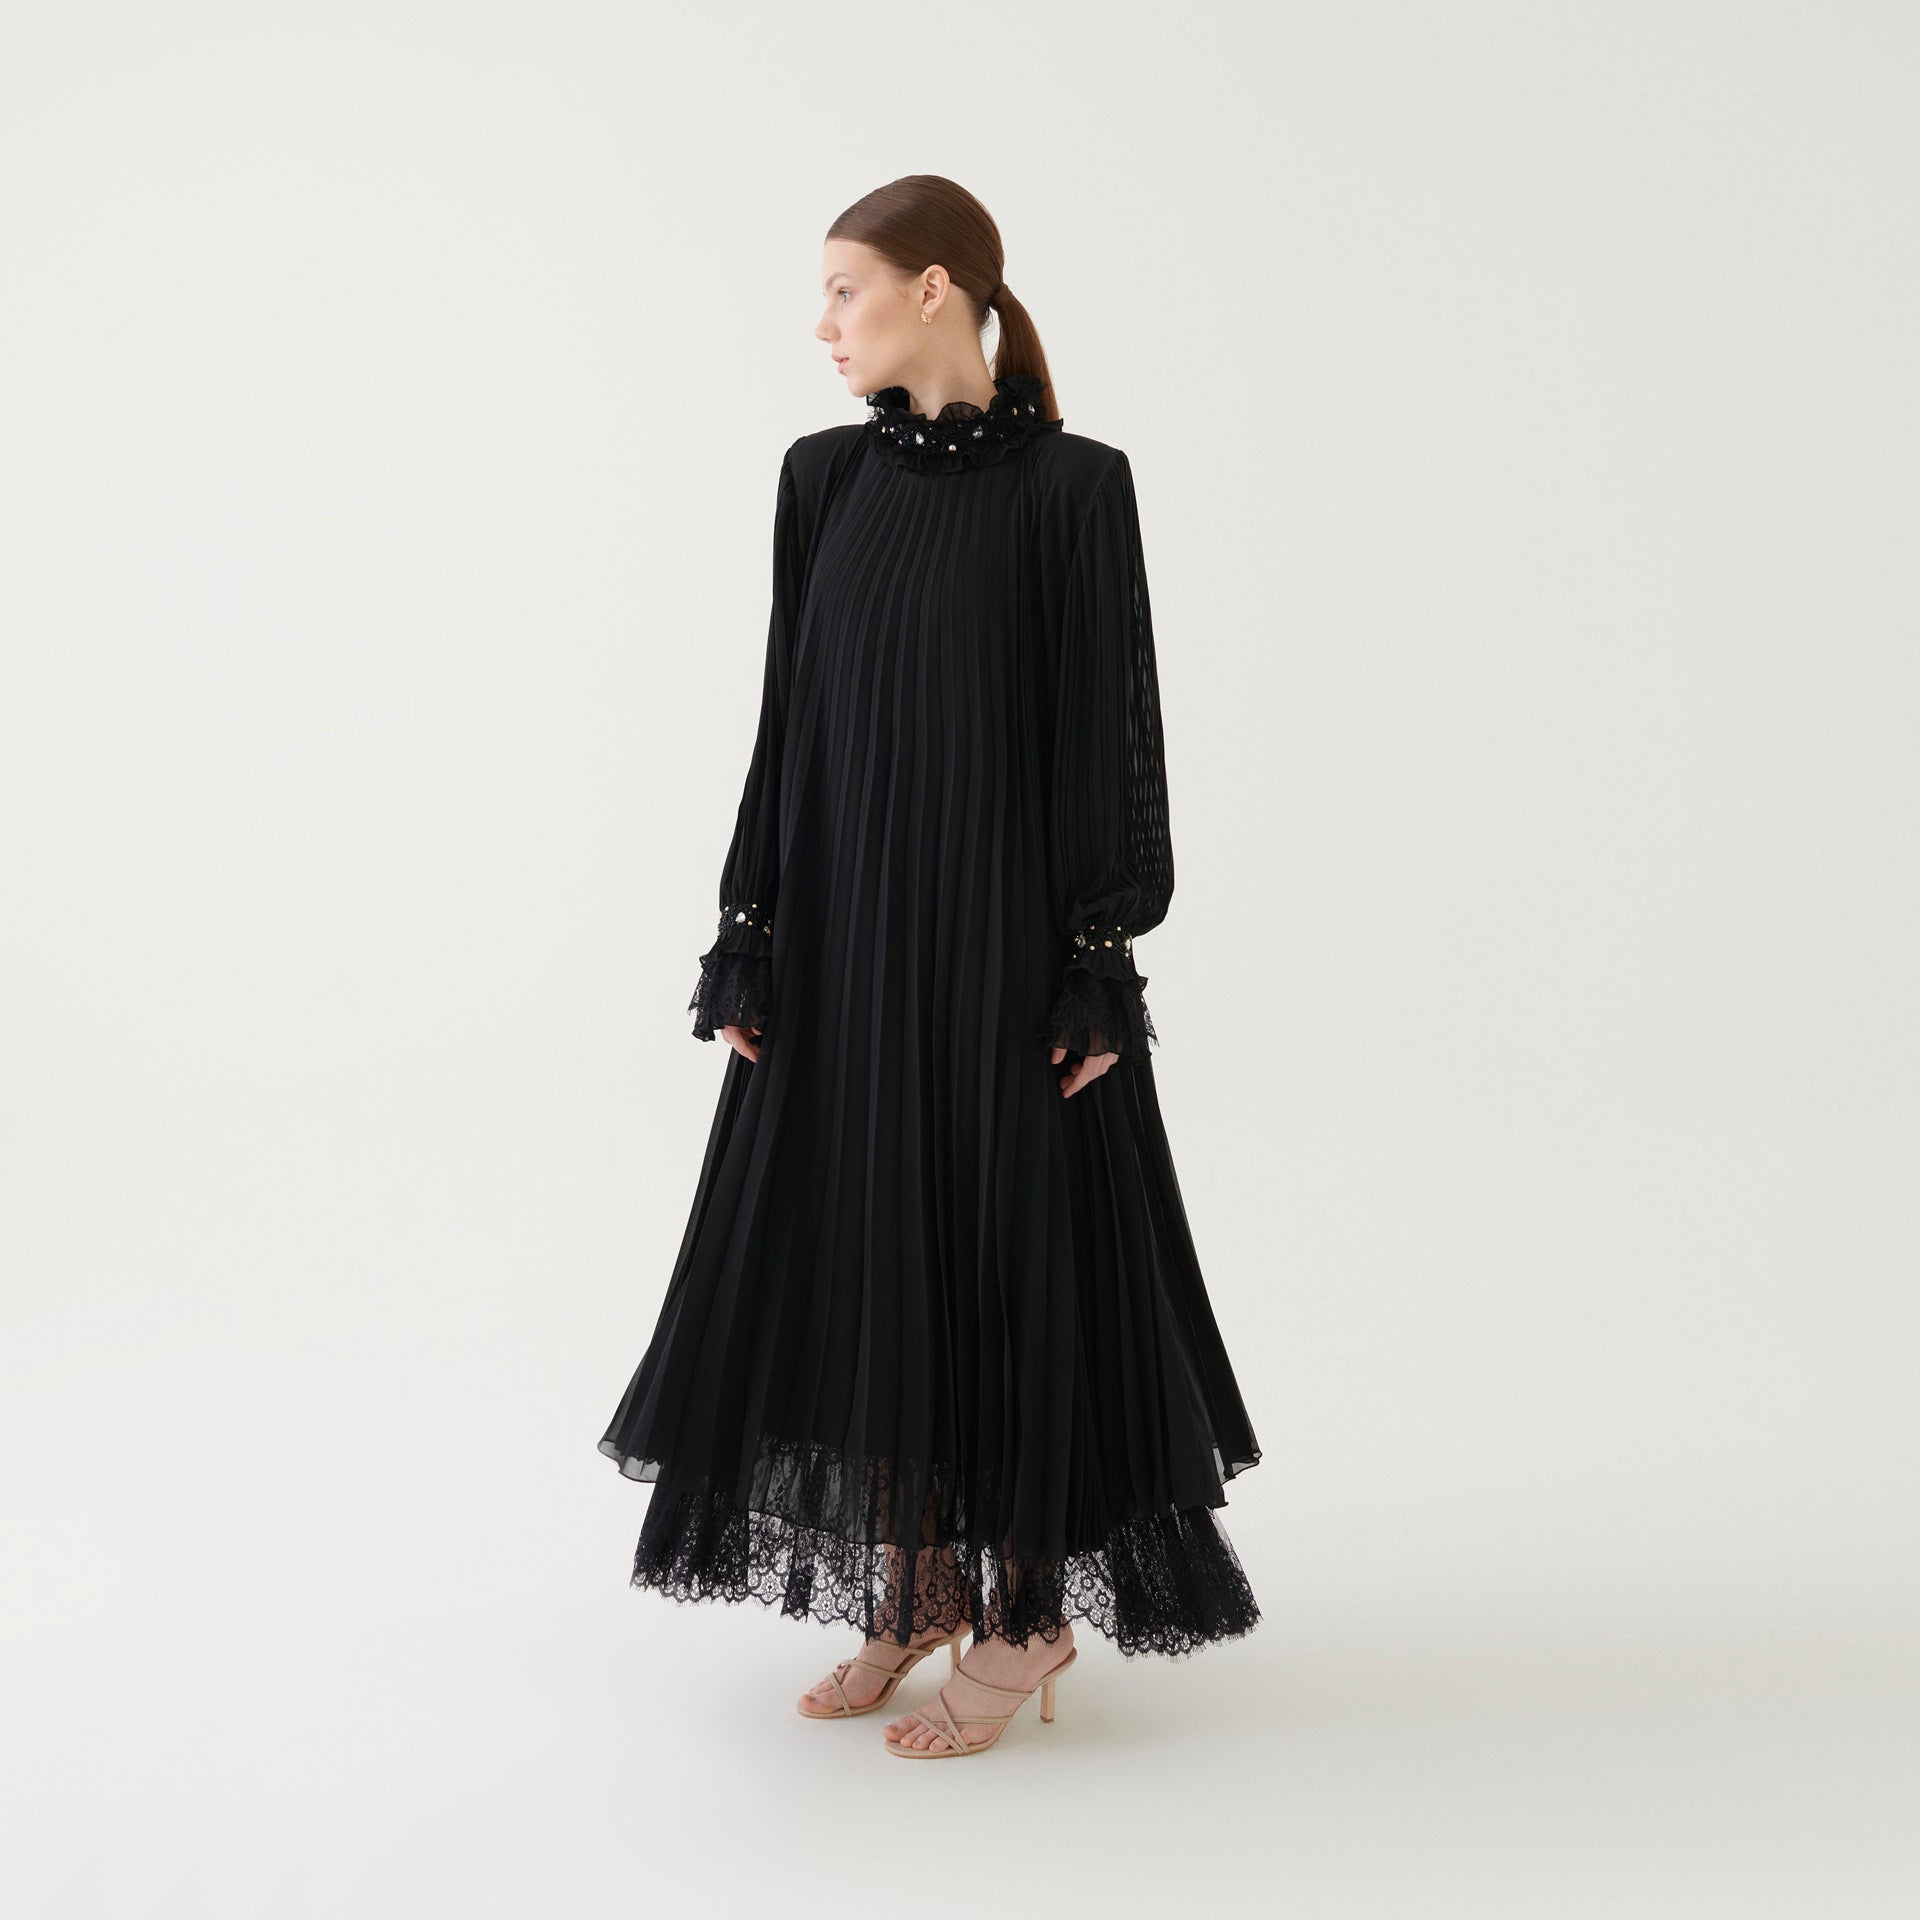 Black Chiffon Pleated Dress From Miha